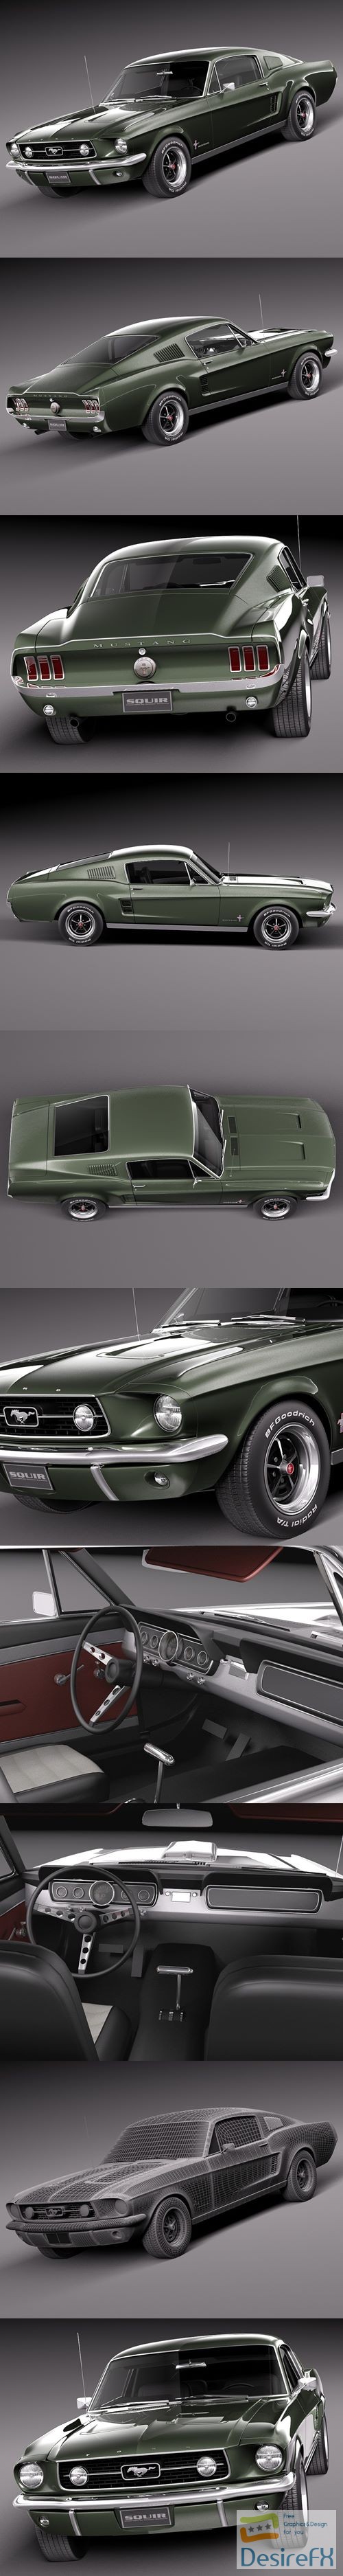 Ford Mustang Fastback 1967 3D Model